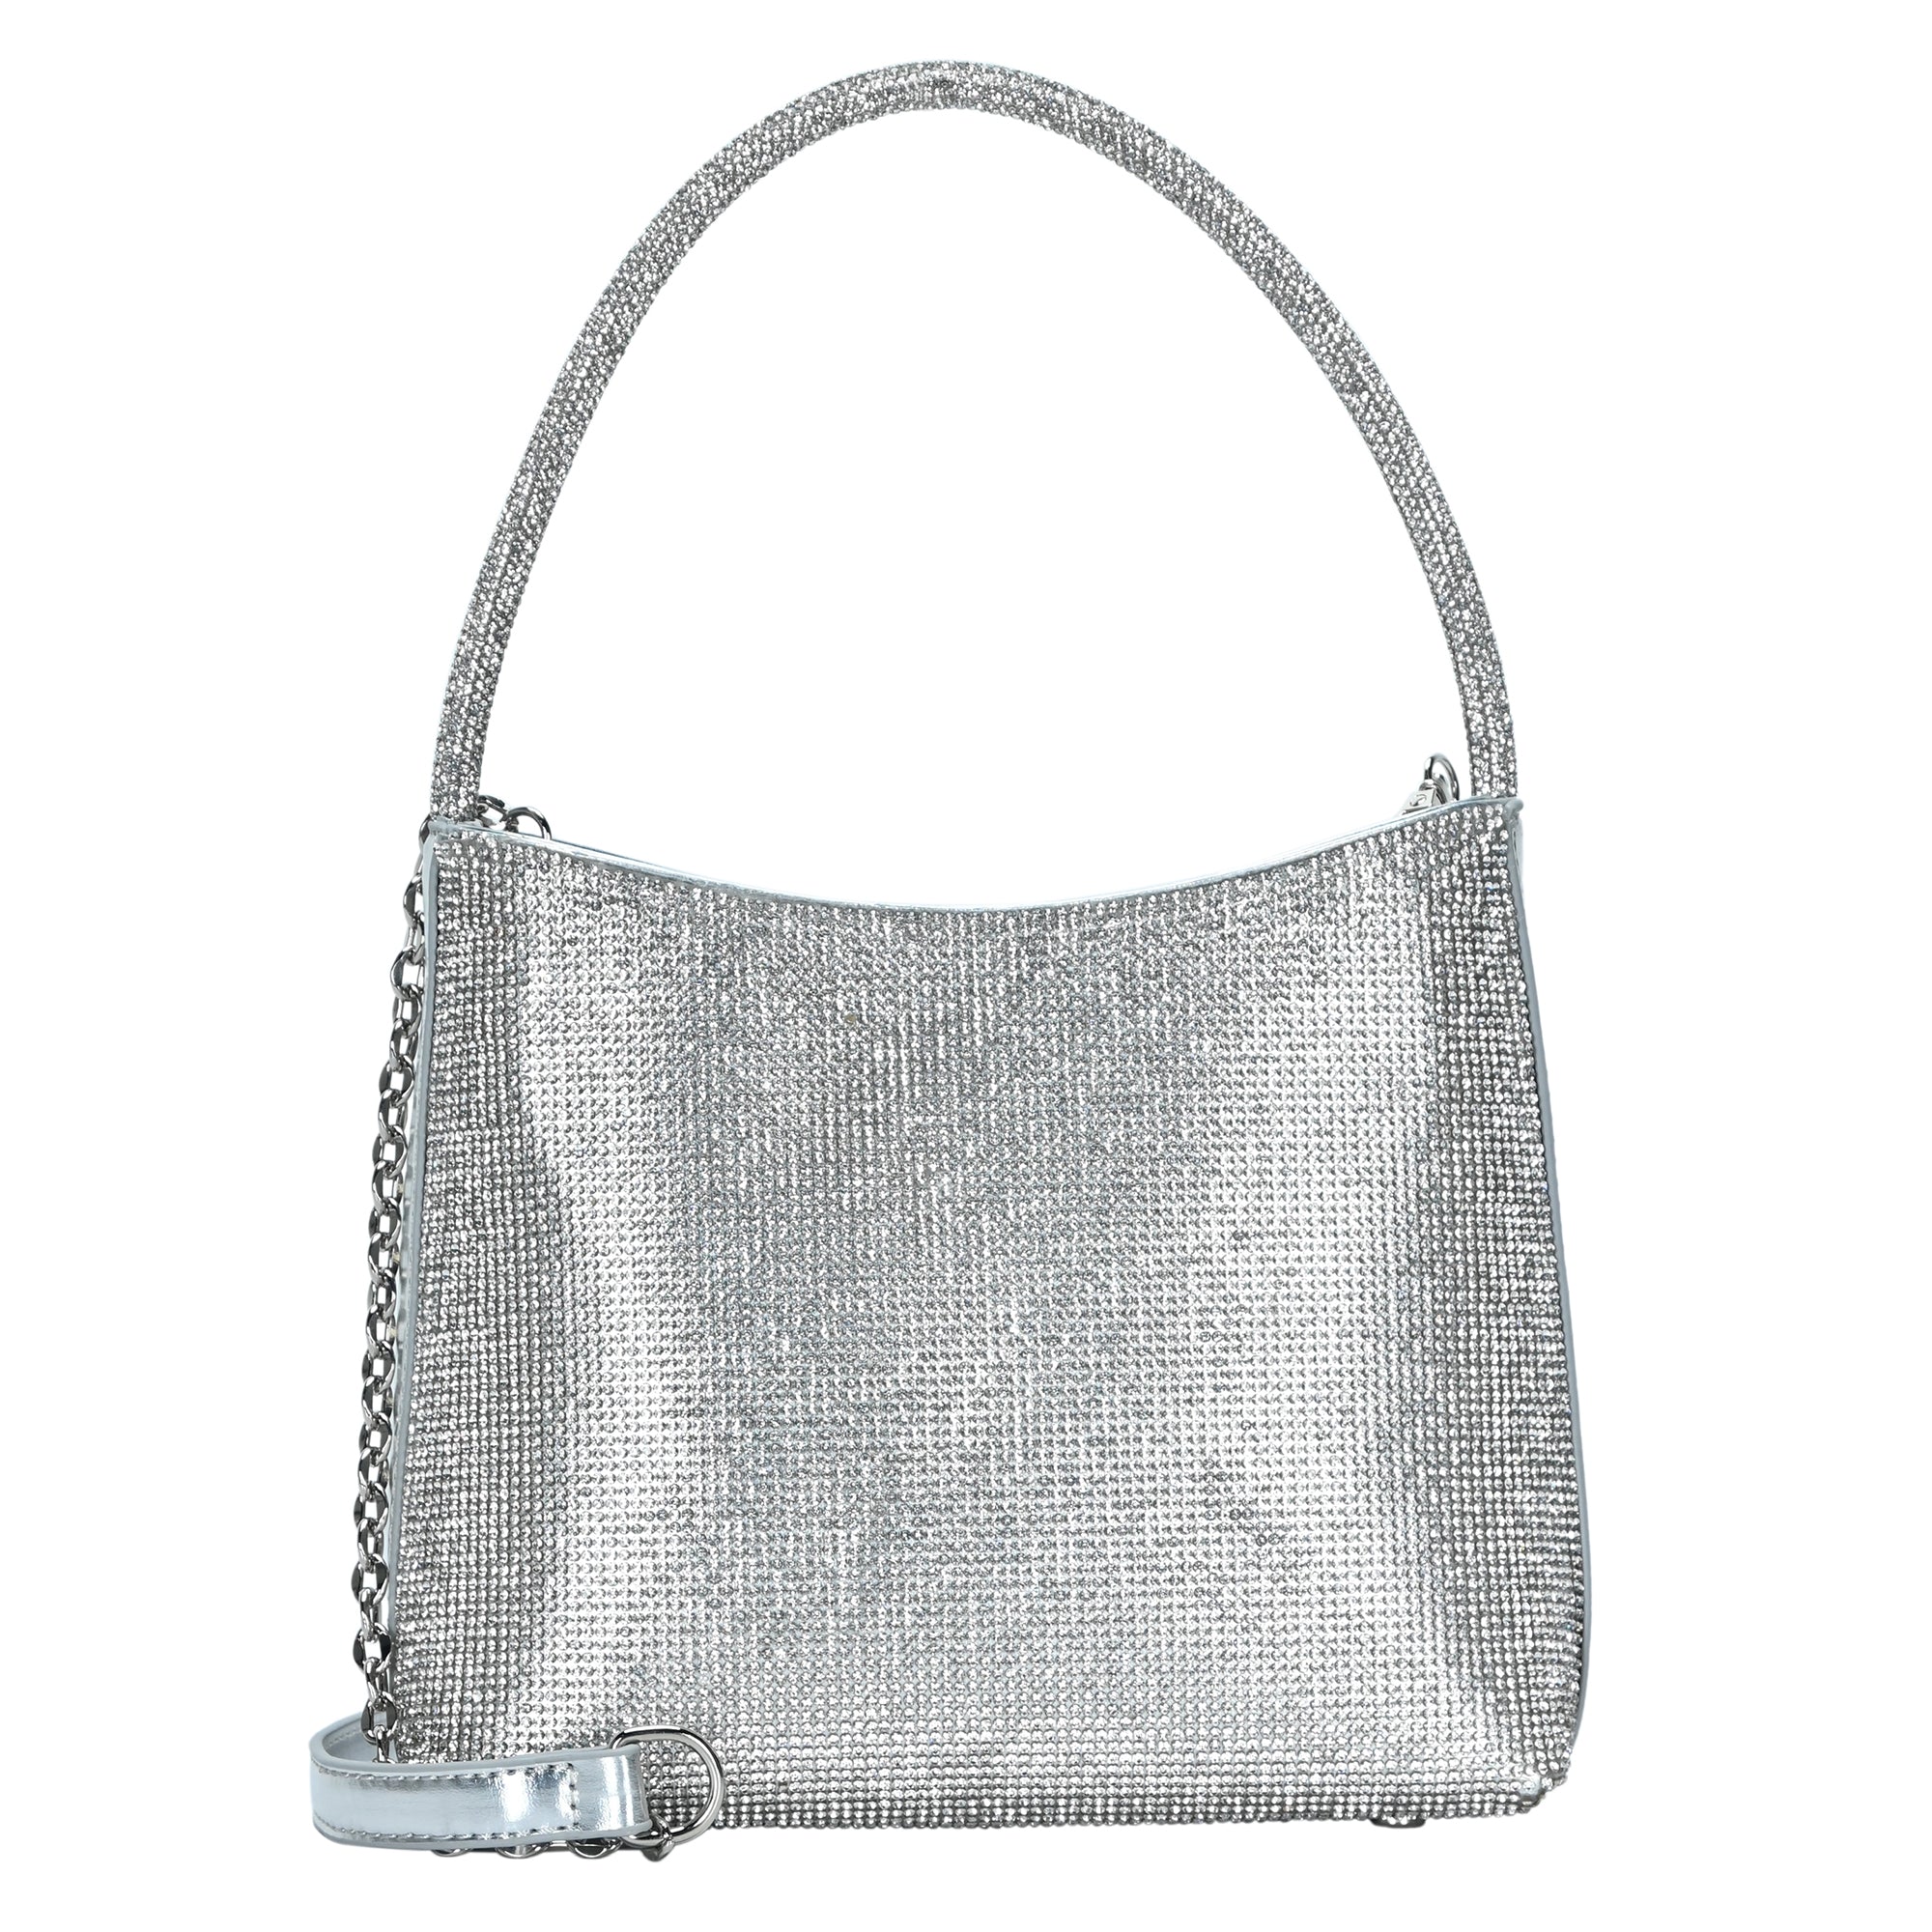 The Hazel Ring Handle Satchel Shoulder Bag by Sasha + Sofi Mauve